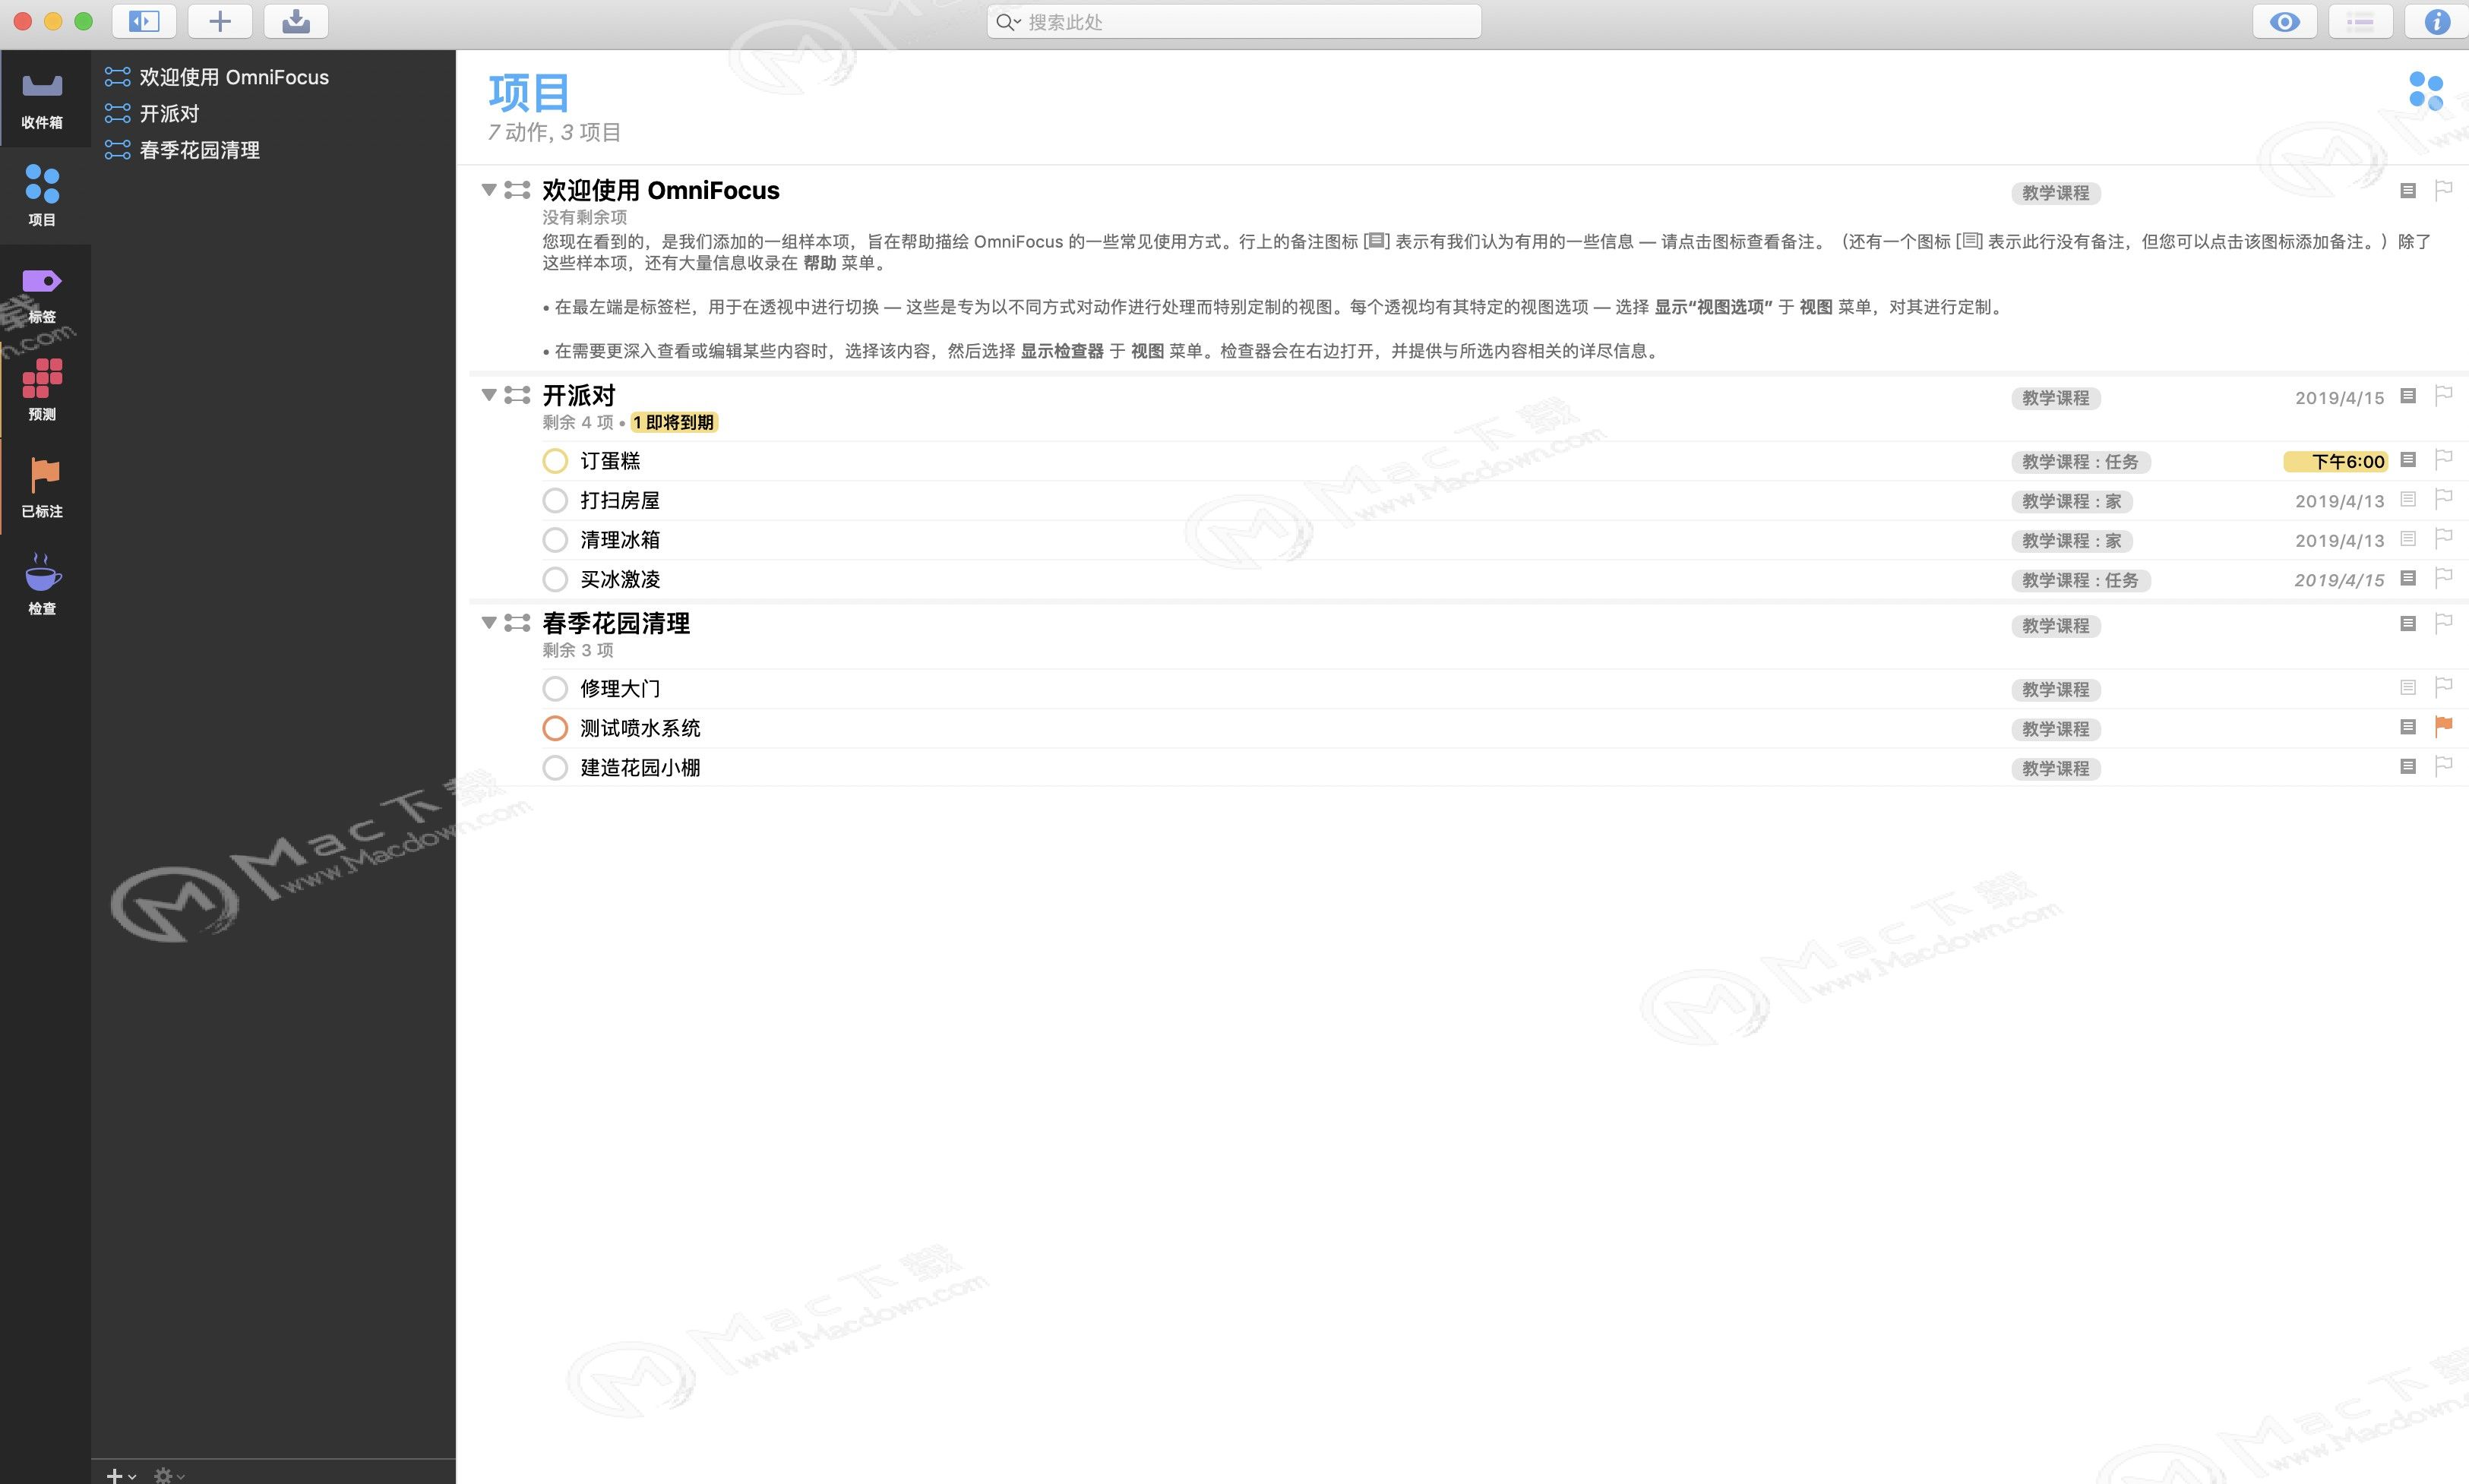 OmniFocus Pro 3 for Mac(GTD时间管理工具)v3.11.6(149.11.11)中文版 - 图5